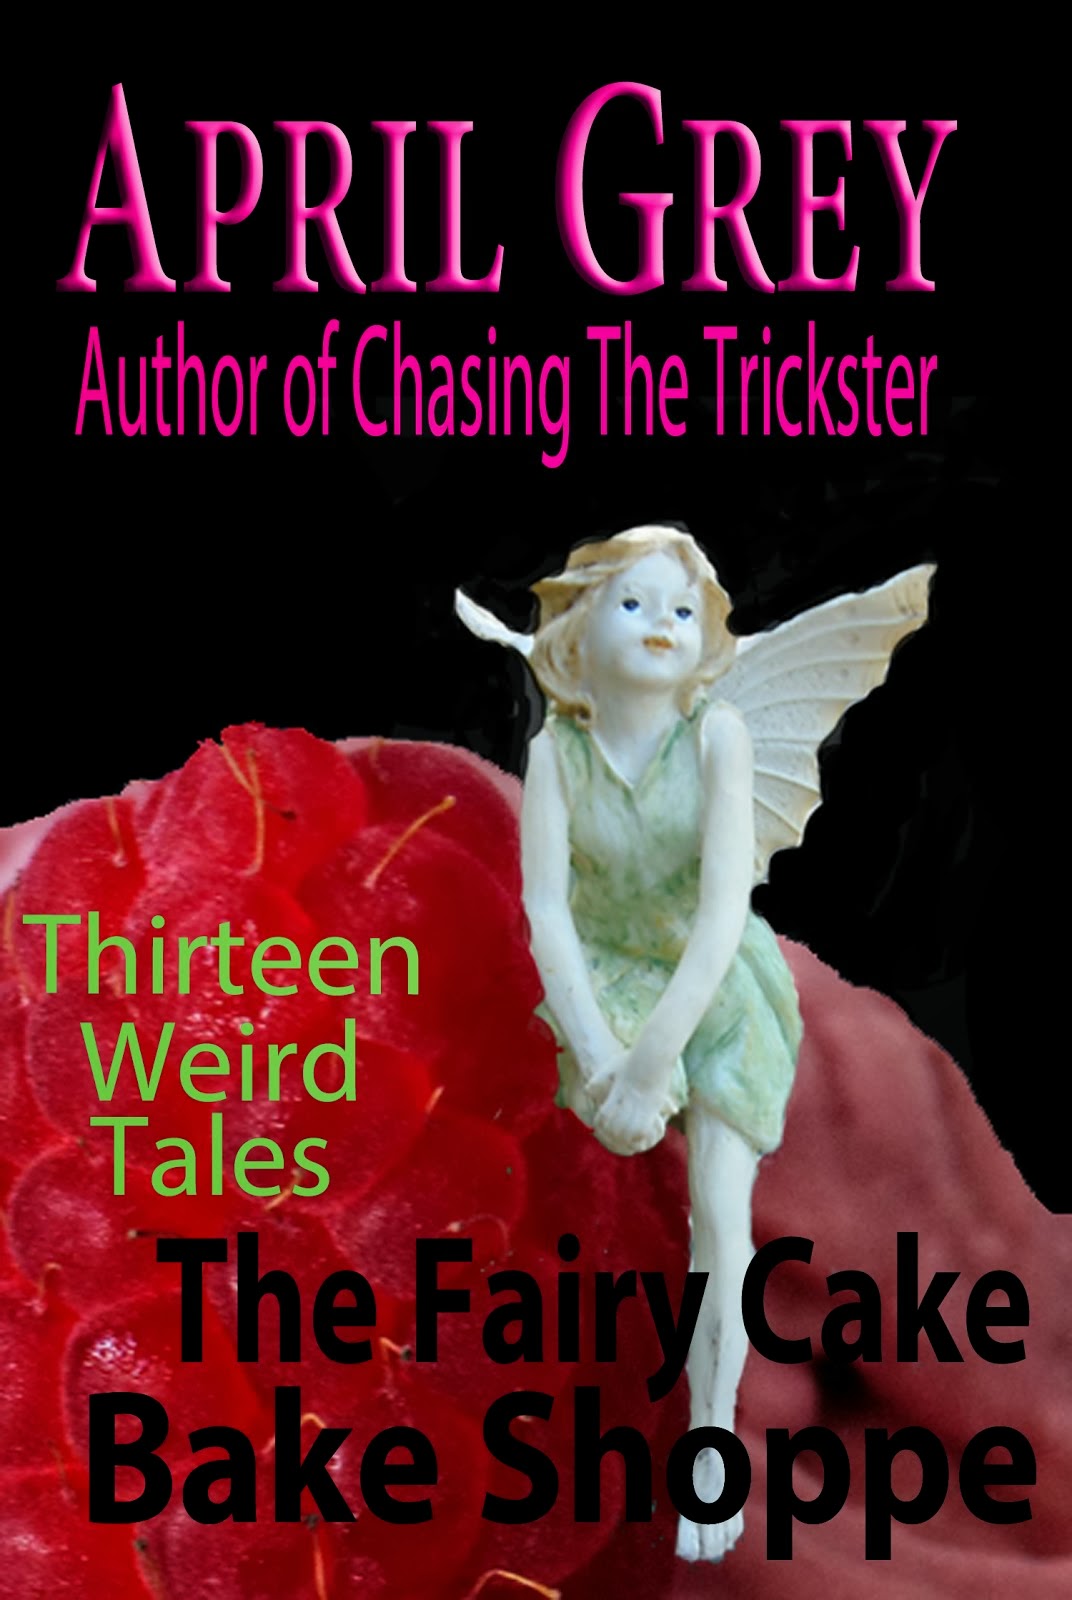 The Fairy Cake Bake Shoppe